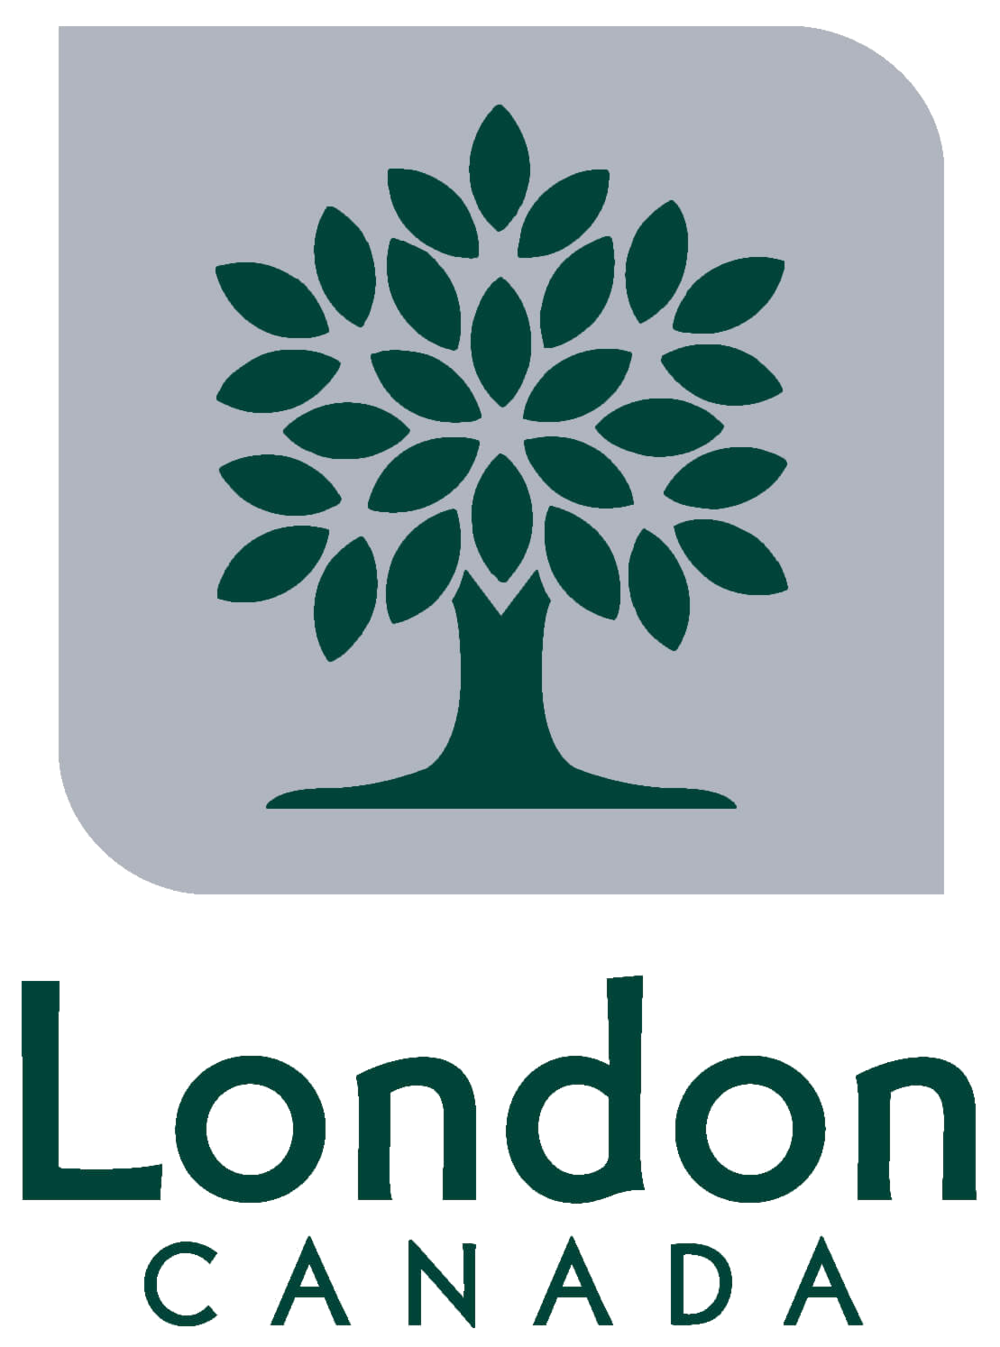 City of London Logo